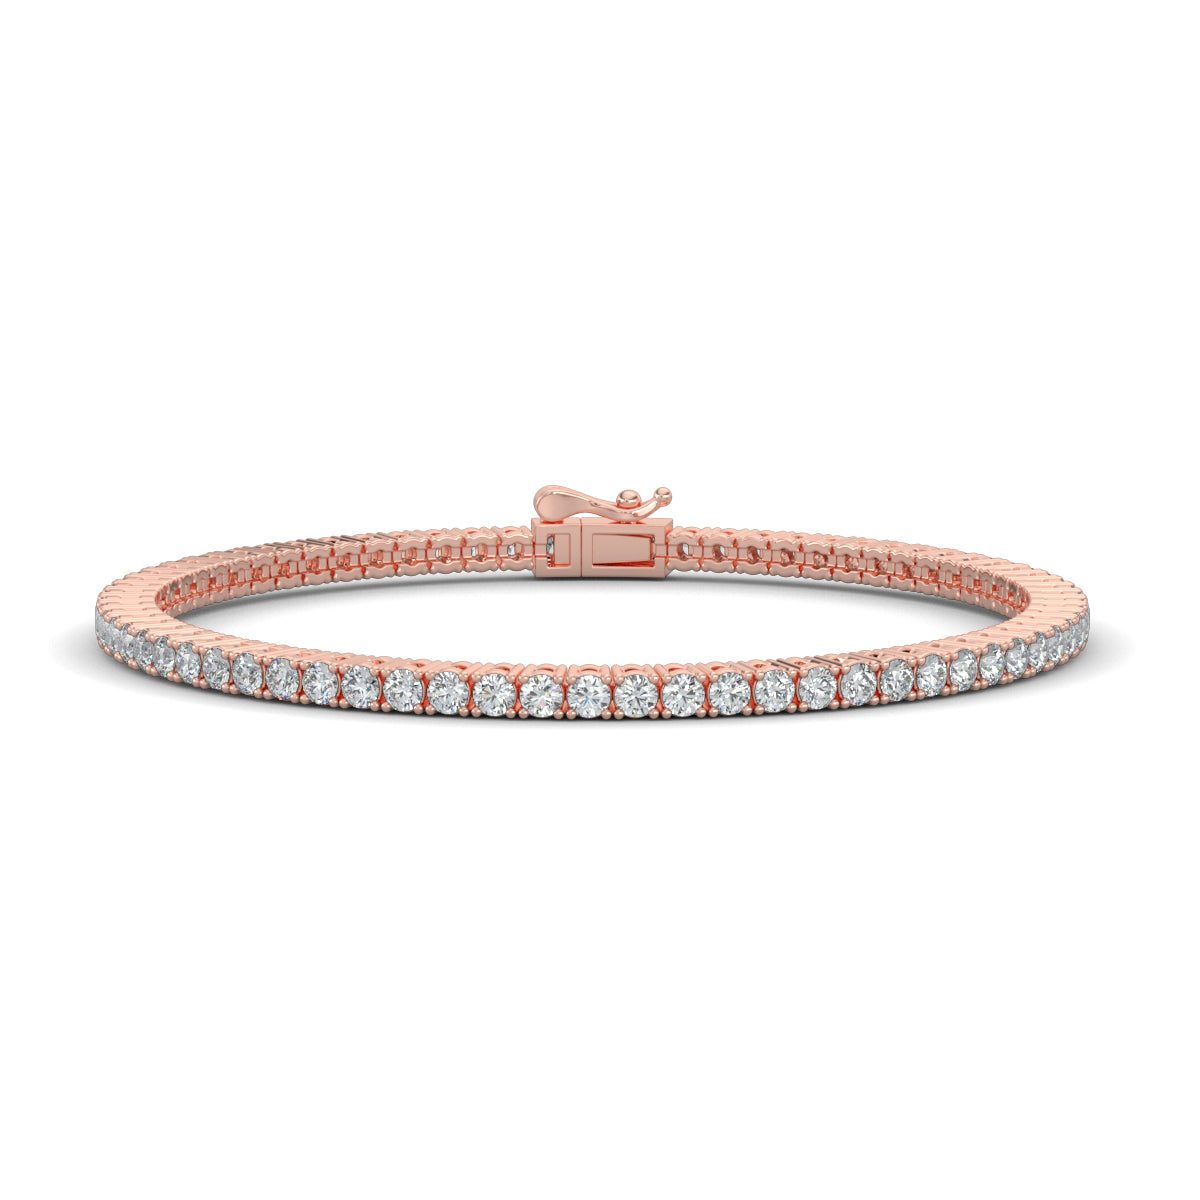 Rose Gold, Diamond Bracelet, Natural diamond bracelet, Lab-grown diamond bracelet, 10-Pointer Tennis Bracelet, tennis bracelet, prong setting, jewelry